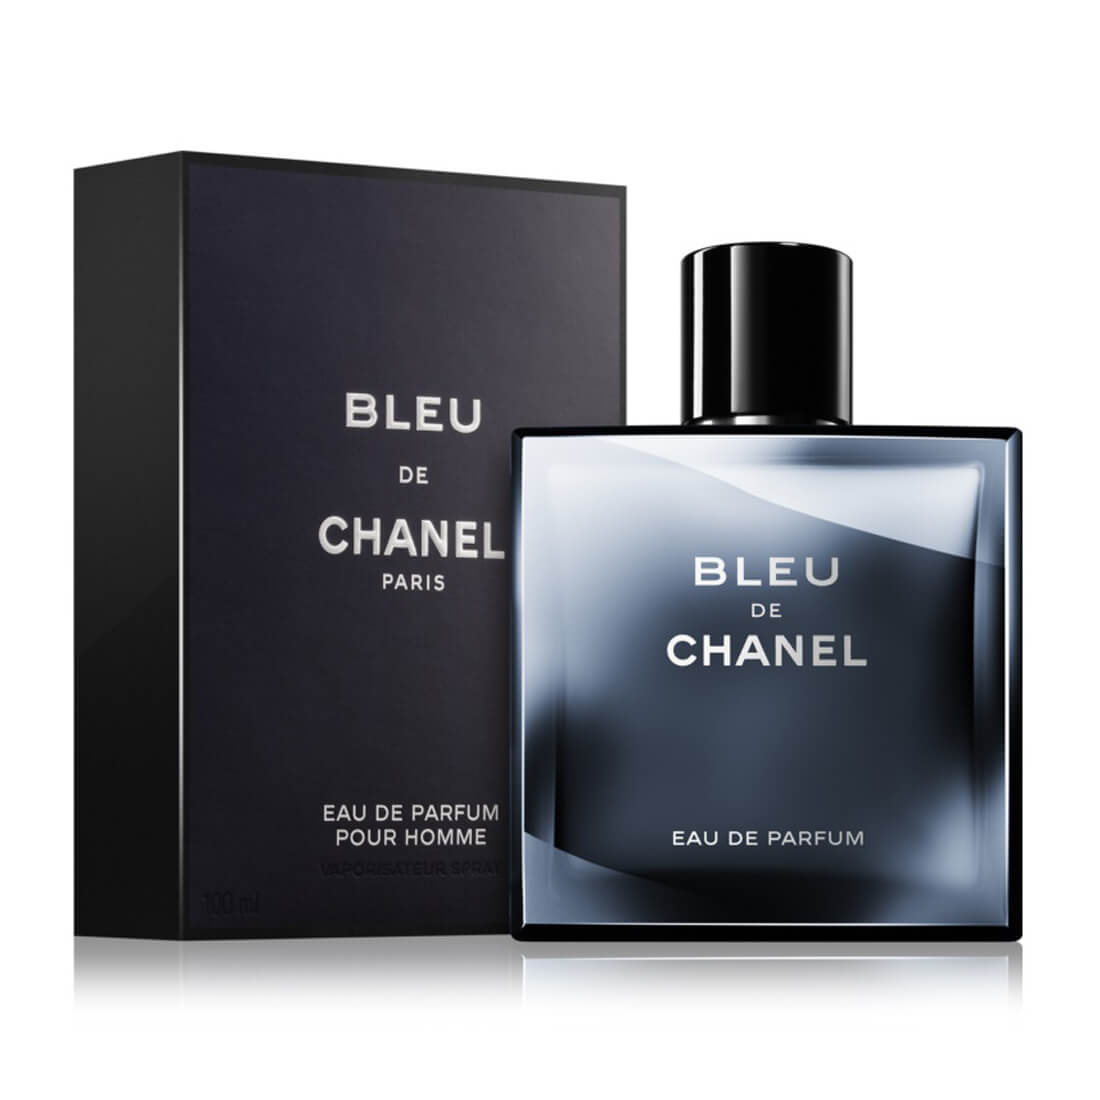 Bleu de Chanel By Chanel for Men EDP Perfume – Splash Fragrance